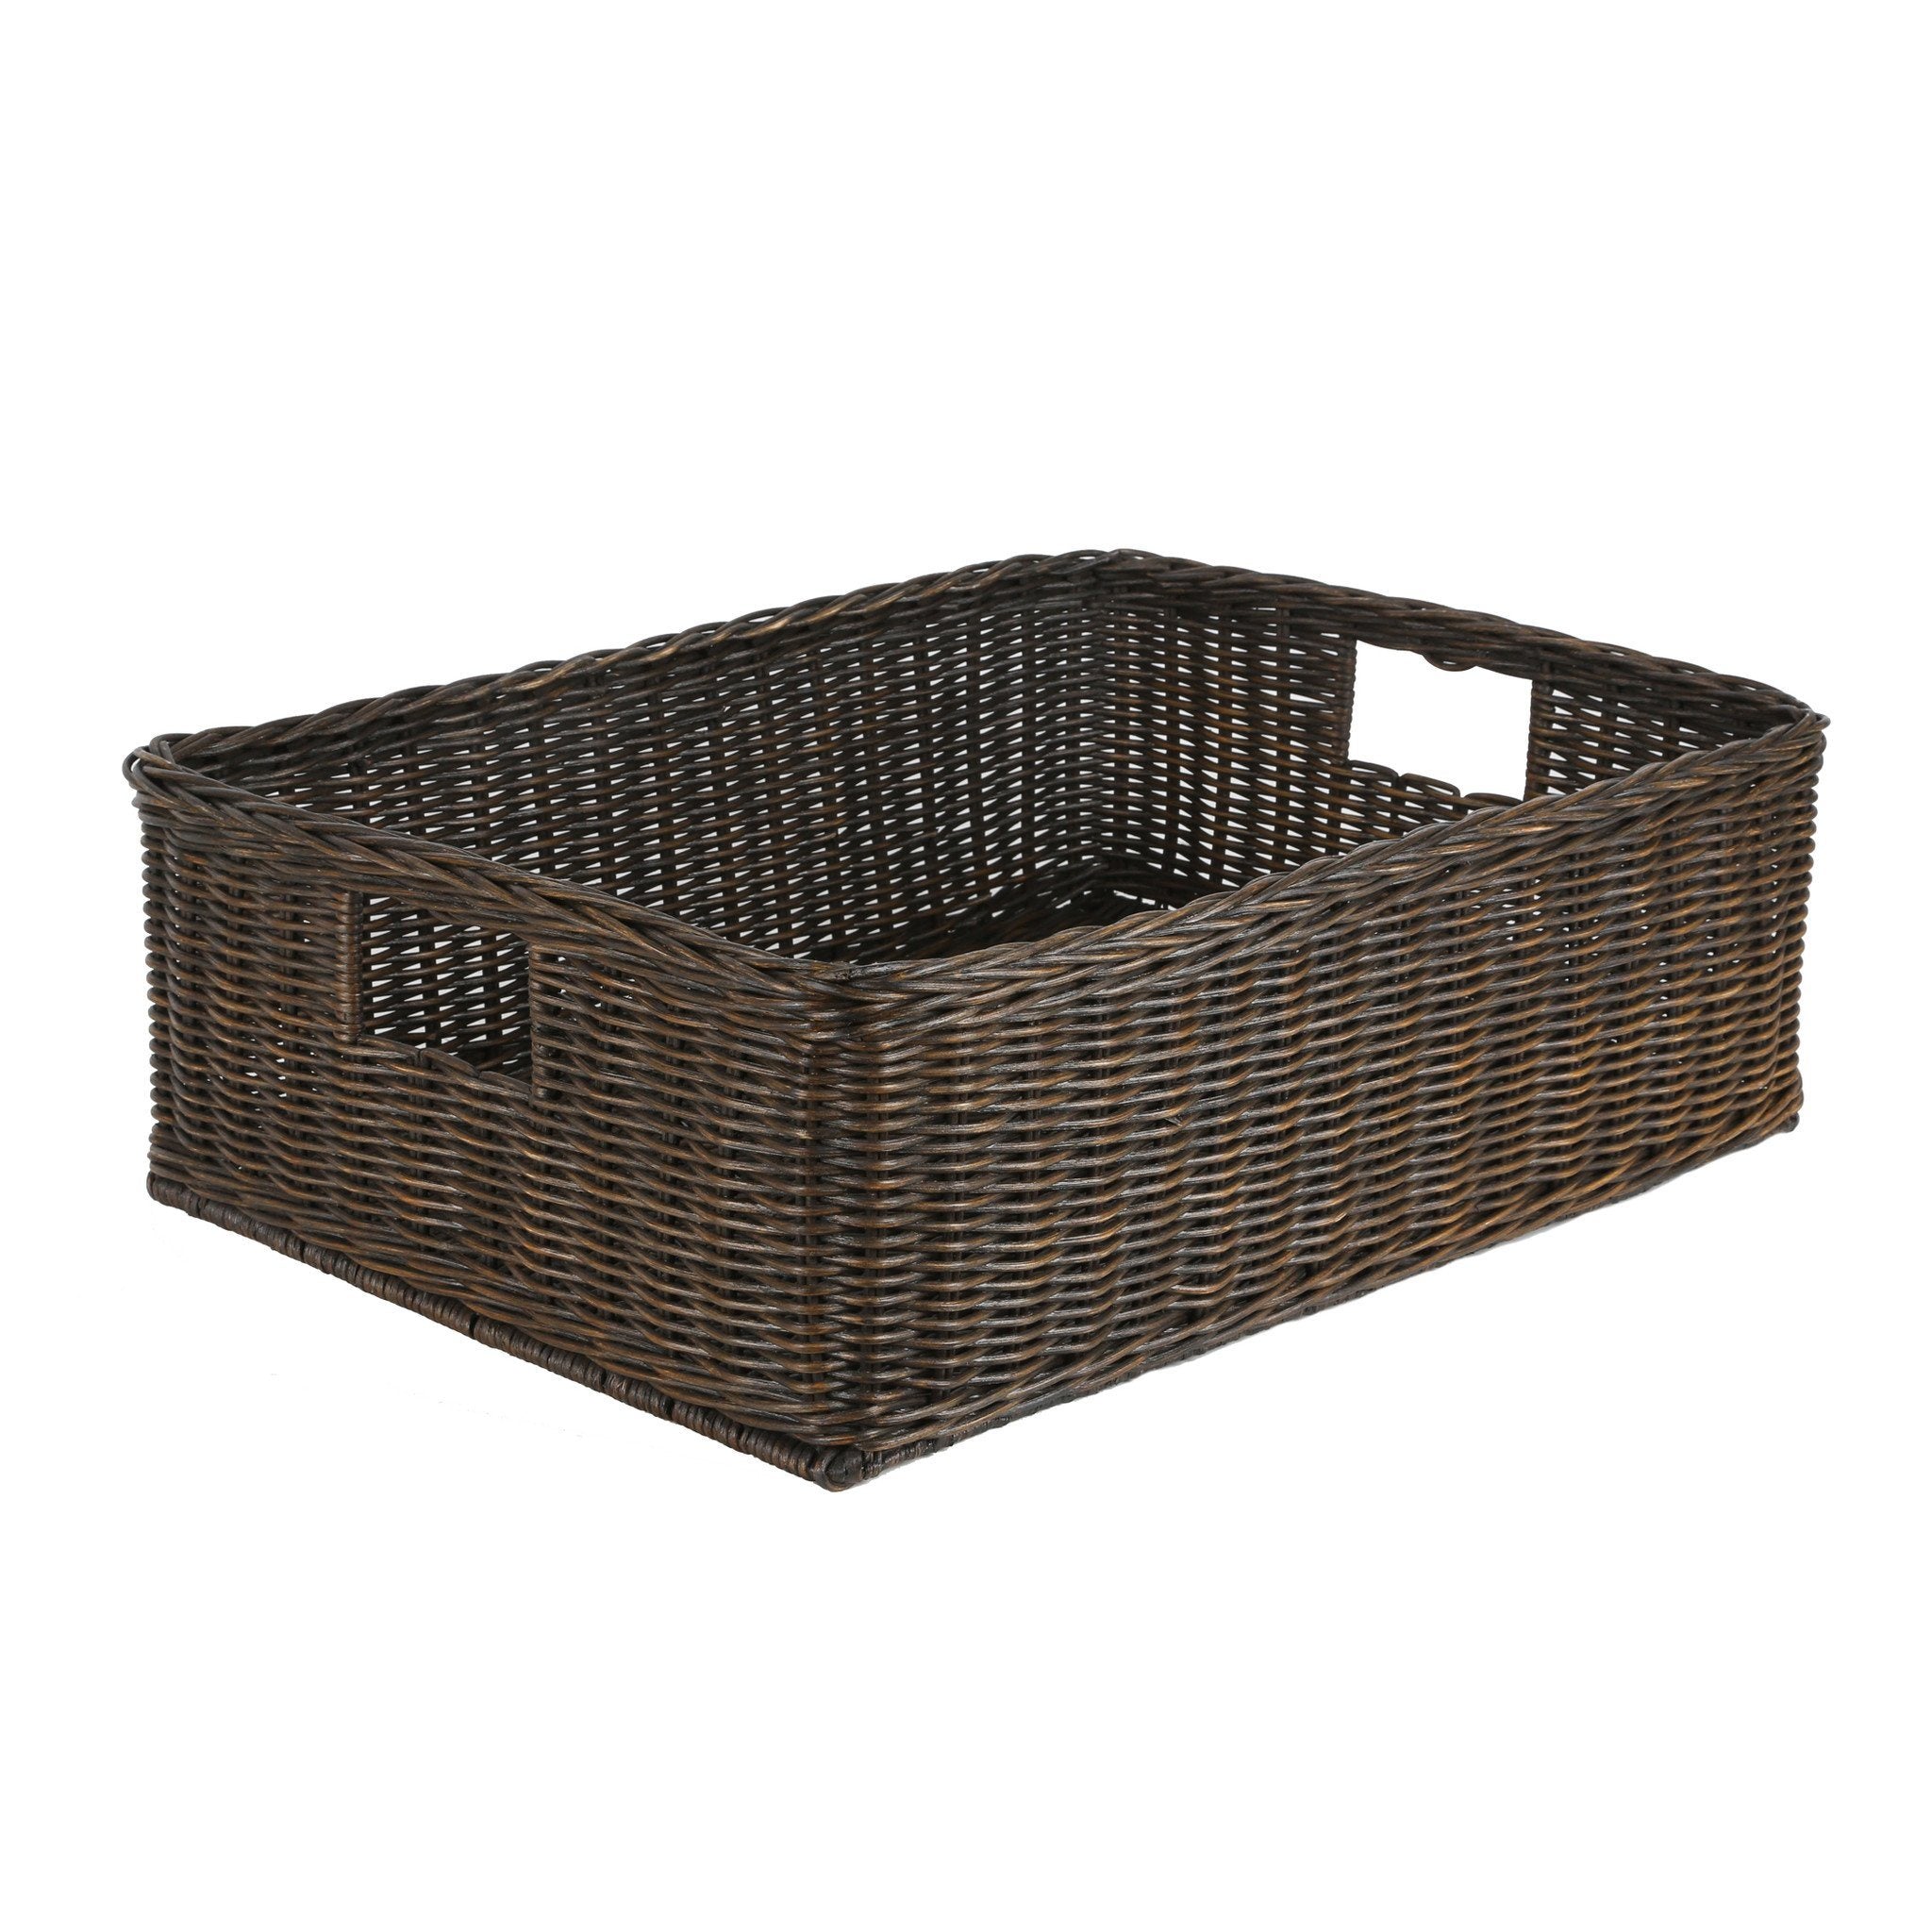 Wicker Baskets for Office Organization – The Basket Lady